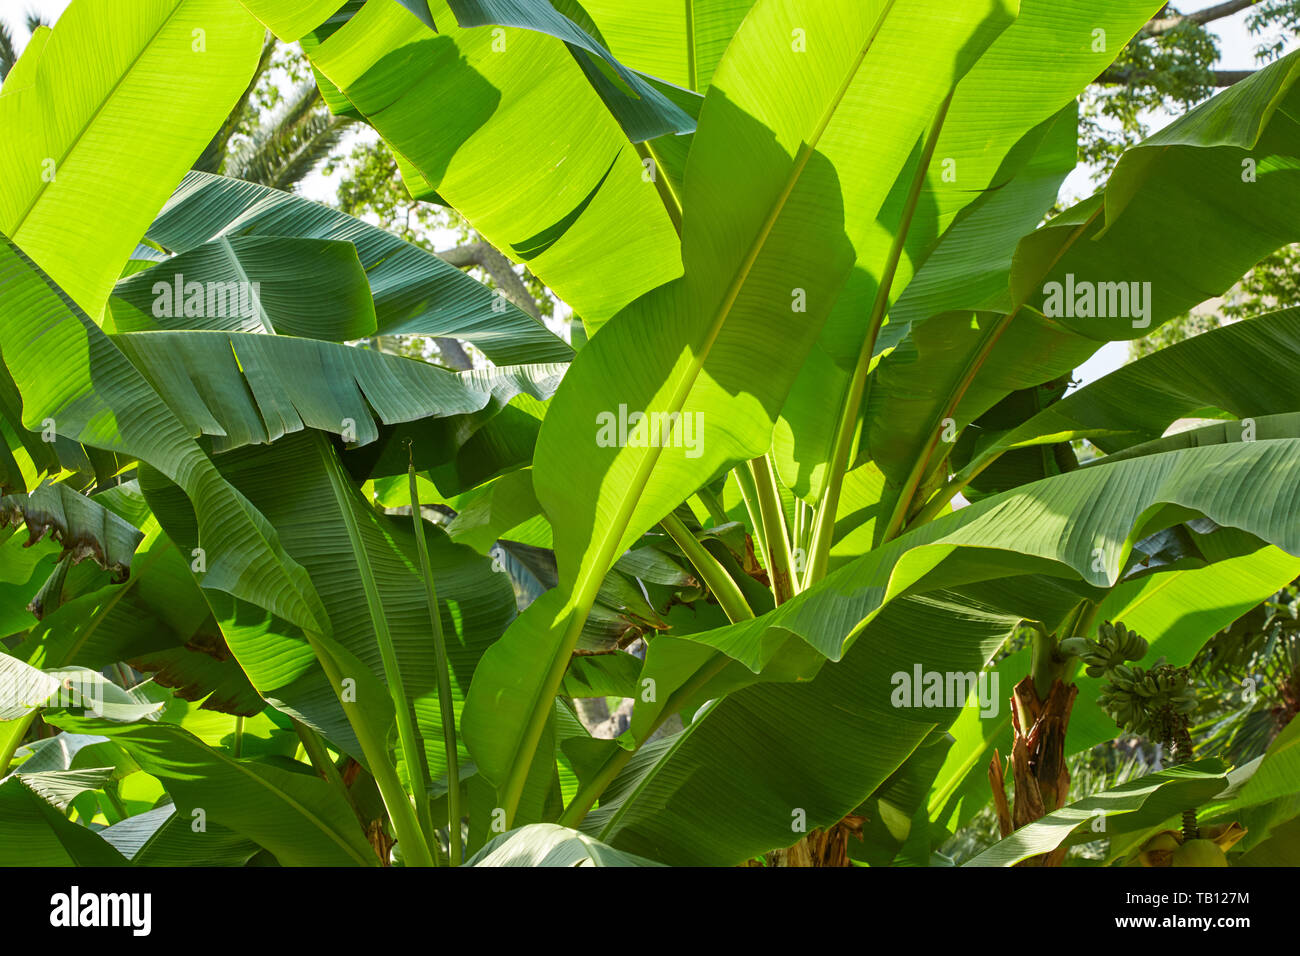 Banana tree, fresh green leaves texture background in sunlight Stock Photo